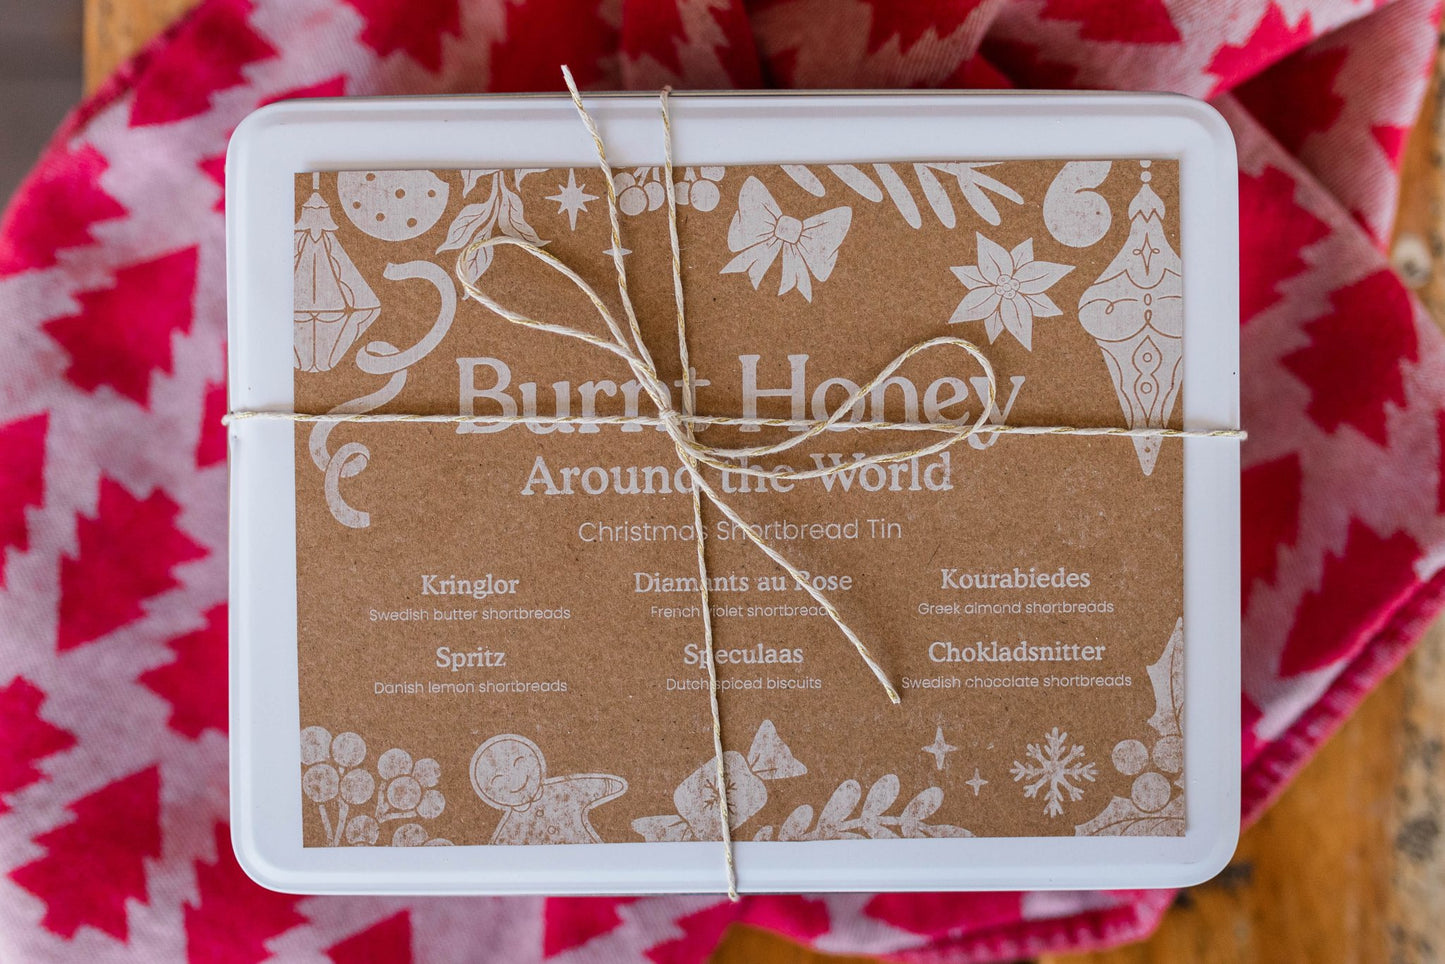 Around the world Christmas biscuit tin - Burnt Honey Bakery - Burnt Honey Bakery